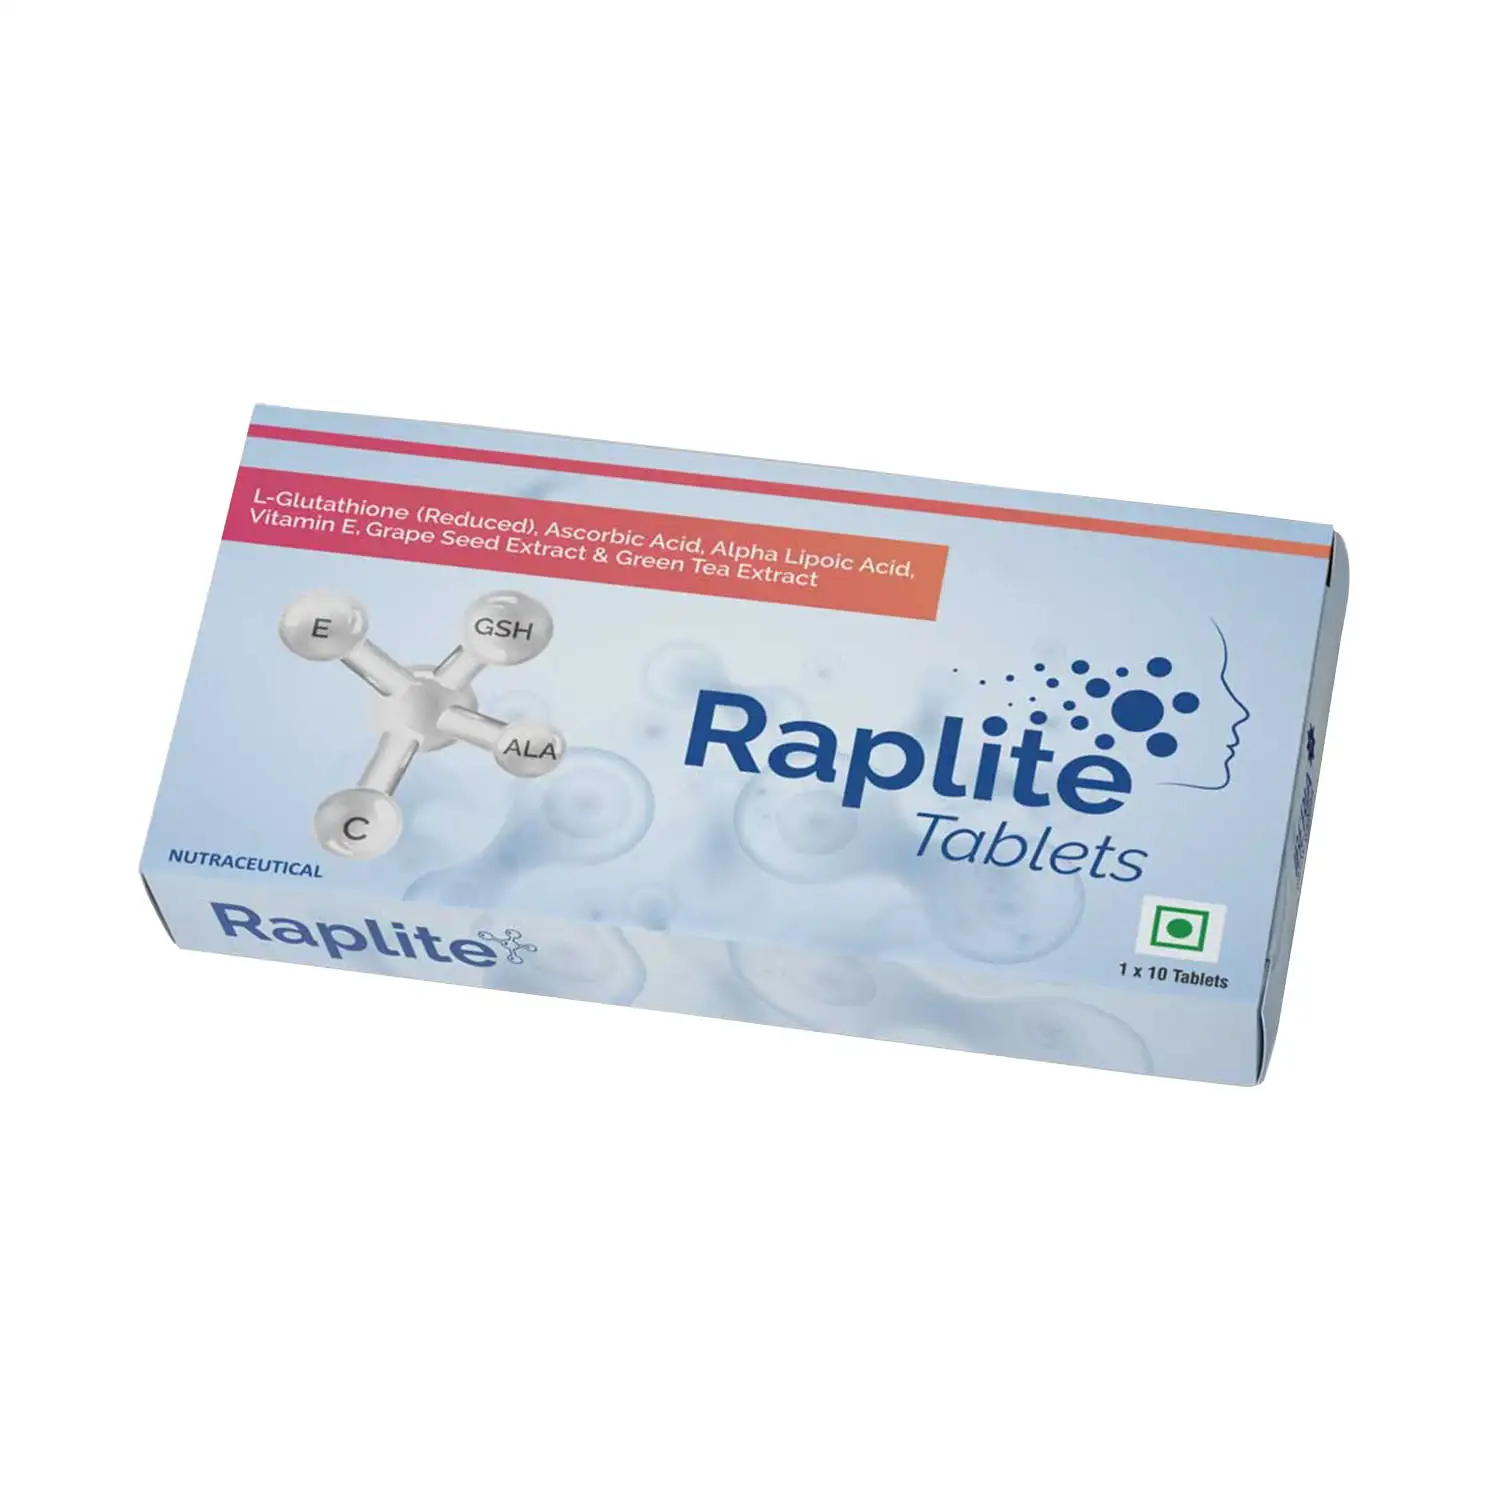 Raplite tablets